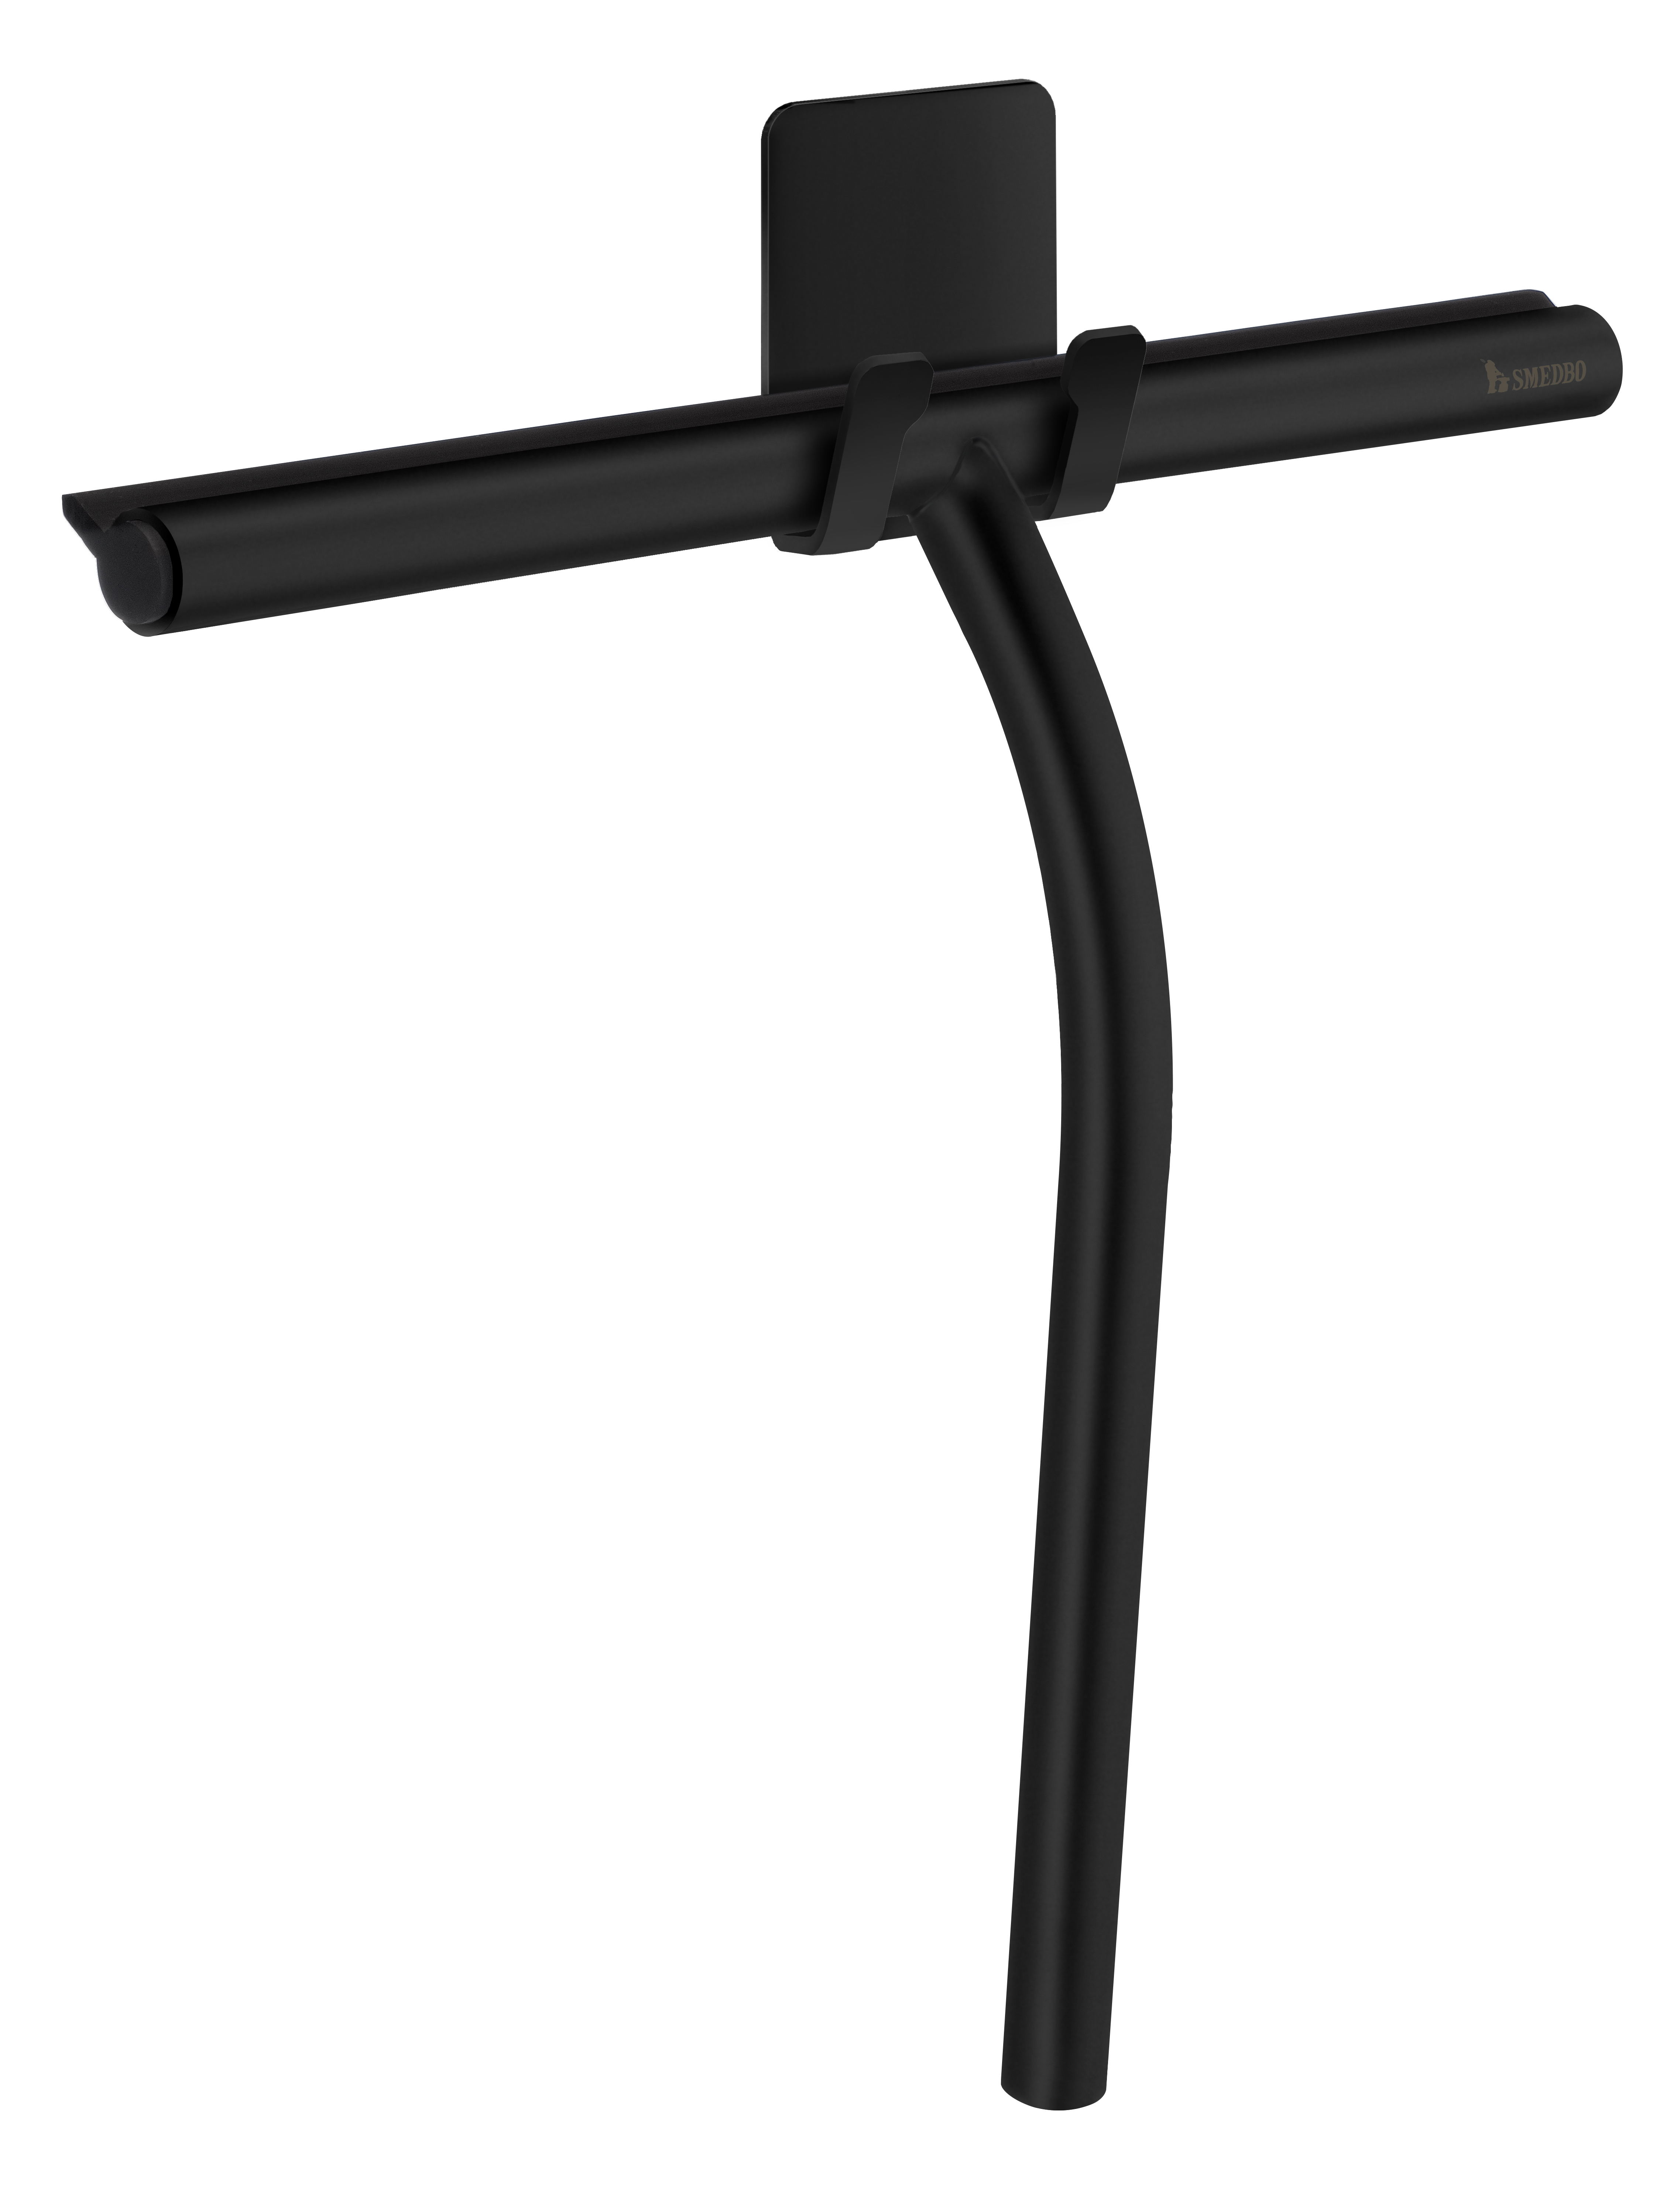 GÜTEWERK Shower Squeegee Black 9 in - Incl. Chrome Suction Cup Hook